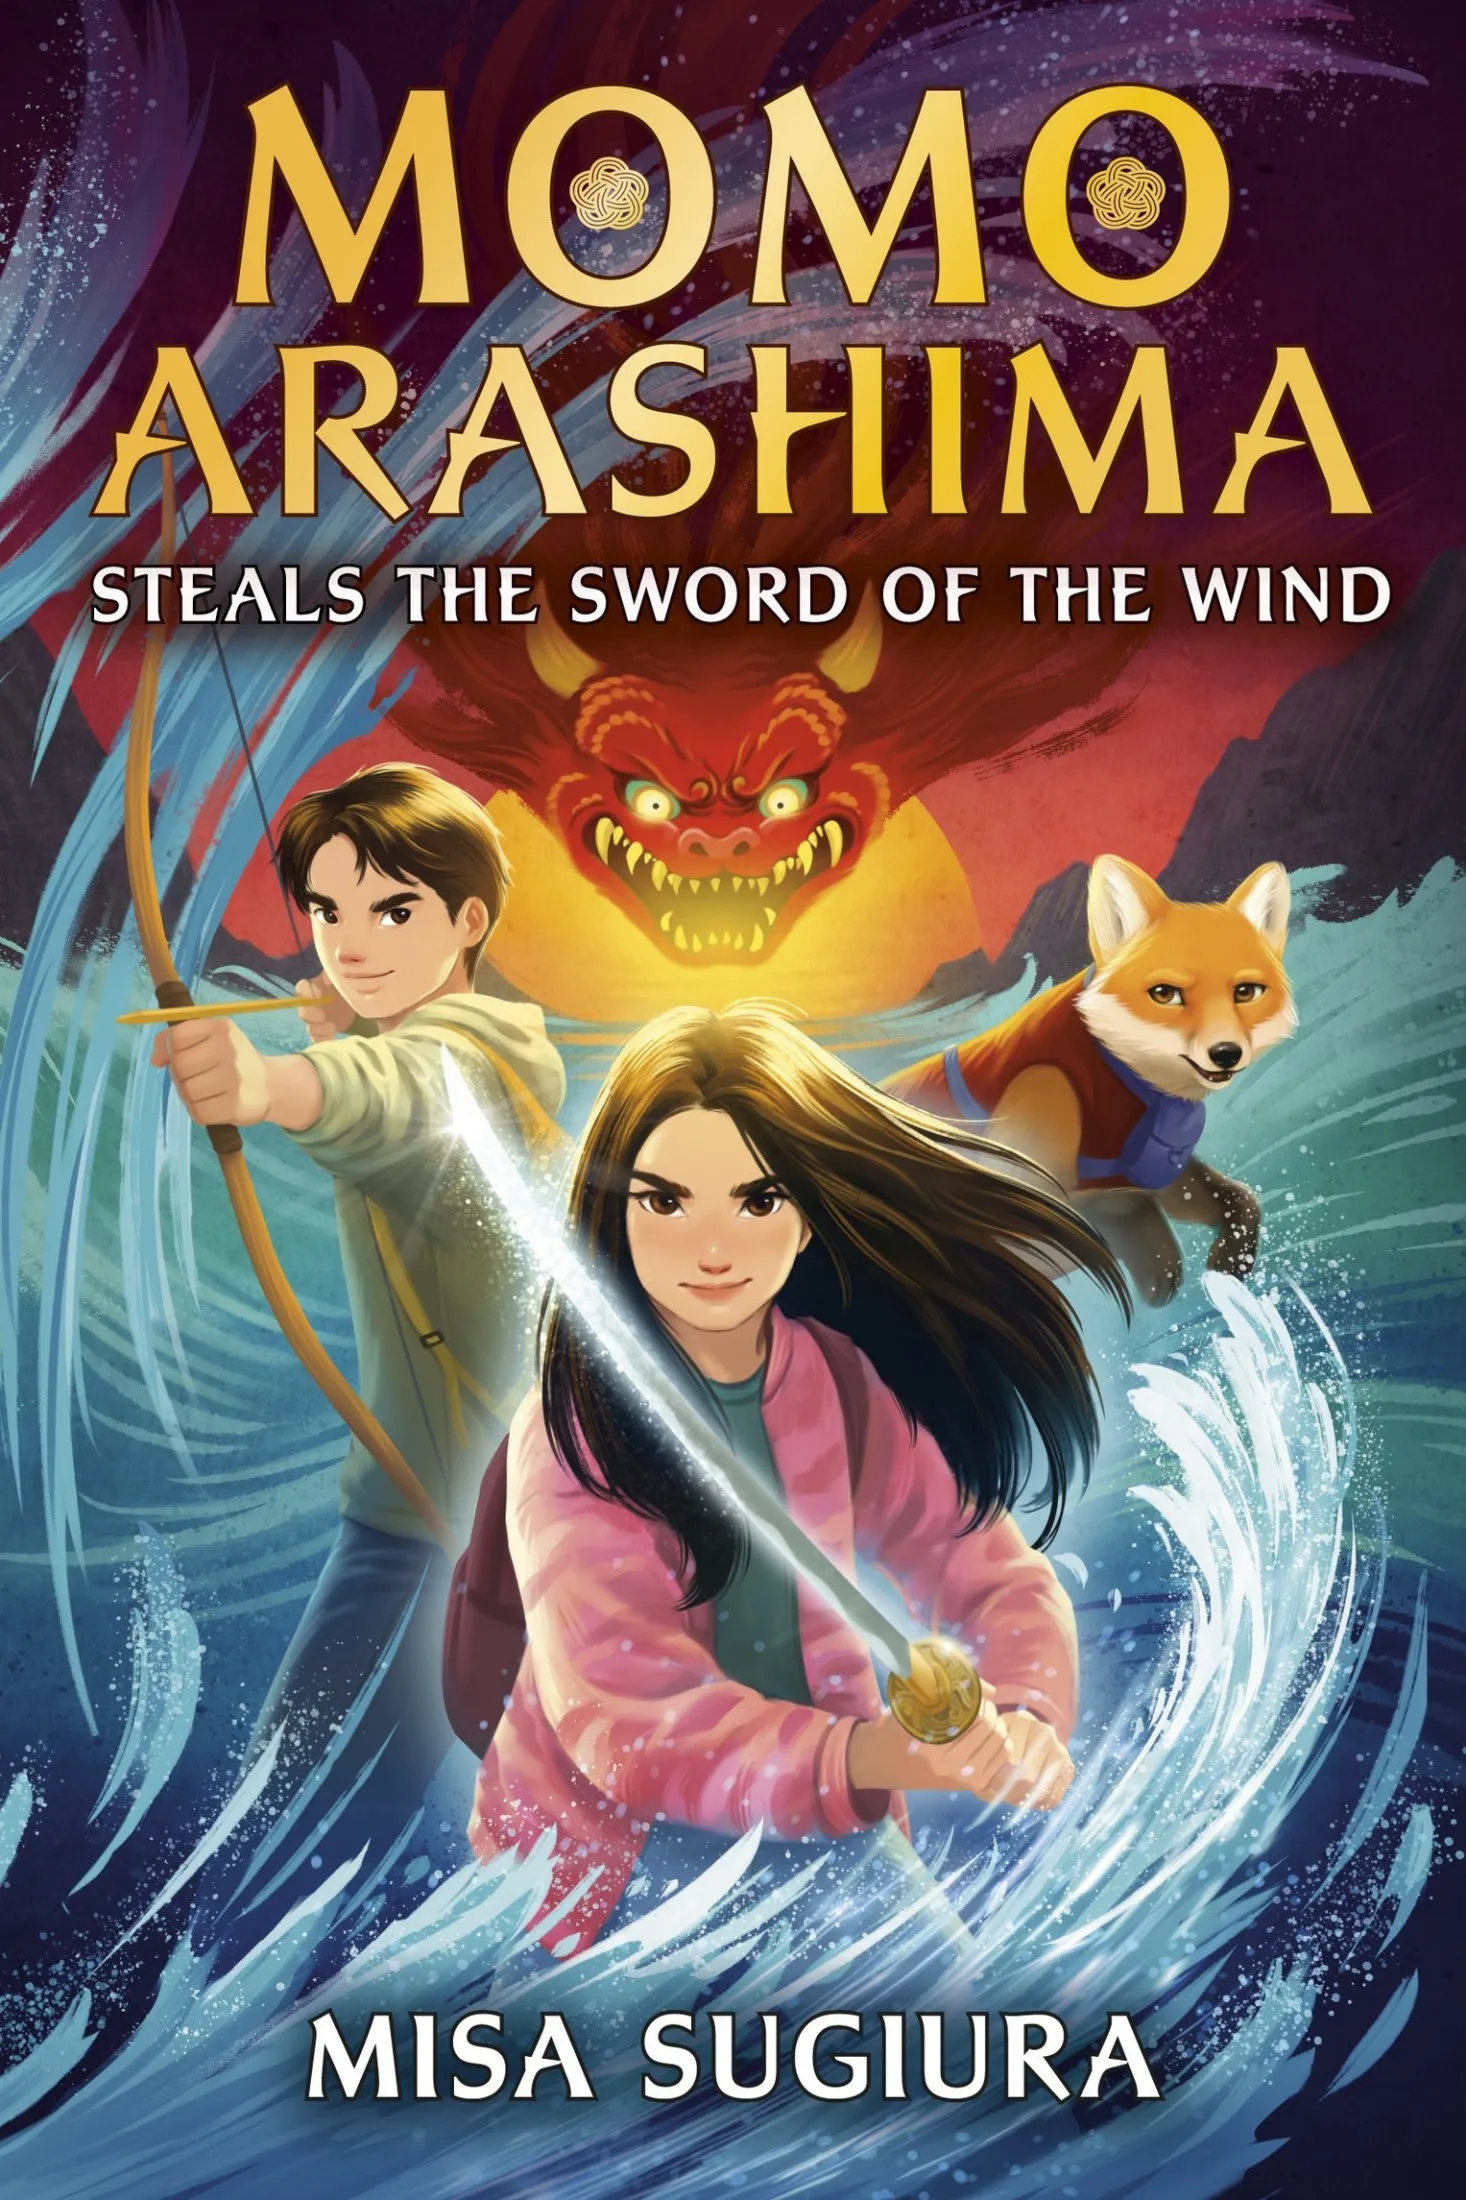 Momo Arashima Steals the Sword of the Wind (Momo Arashima #1)